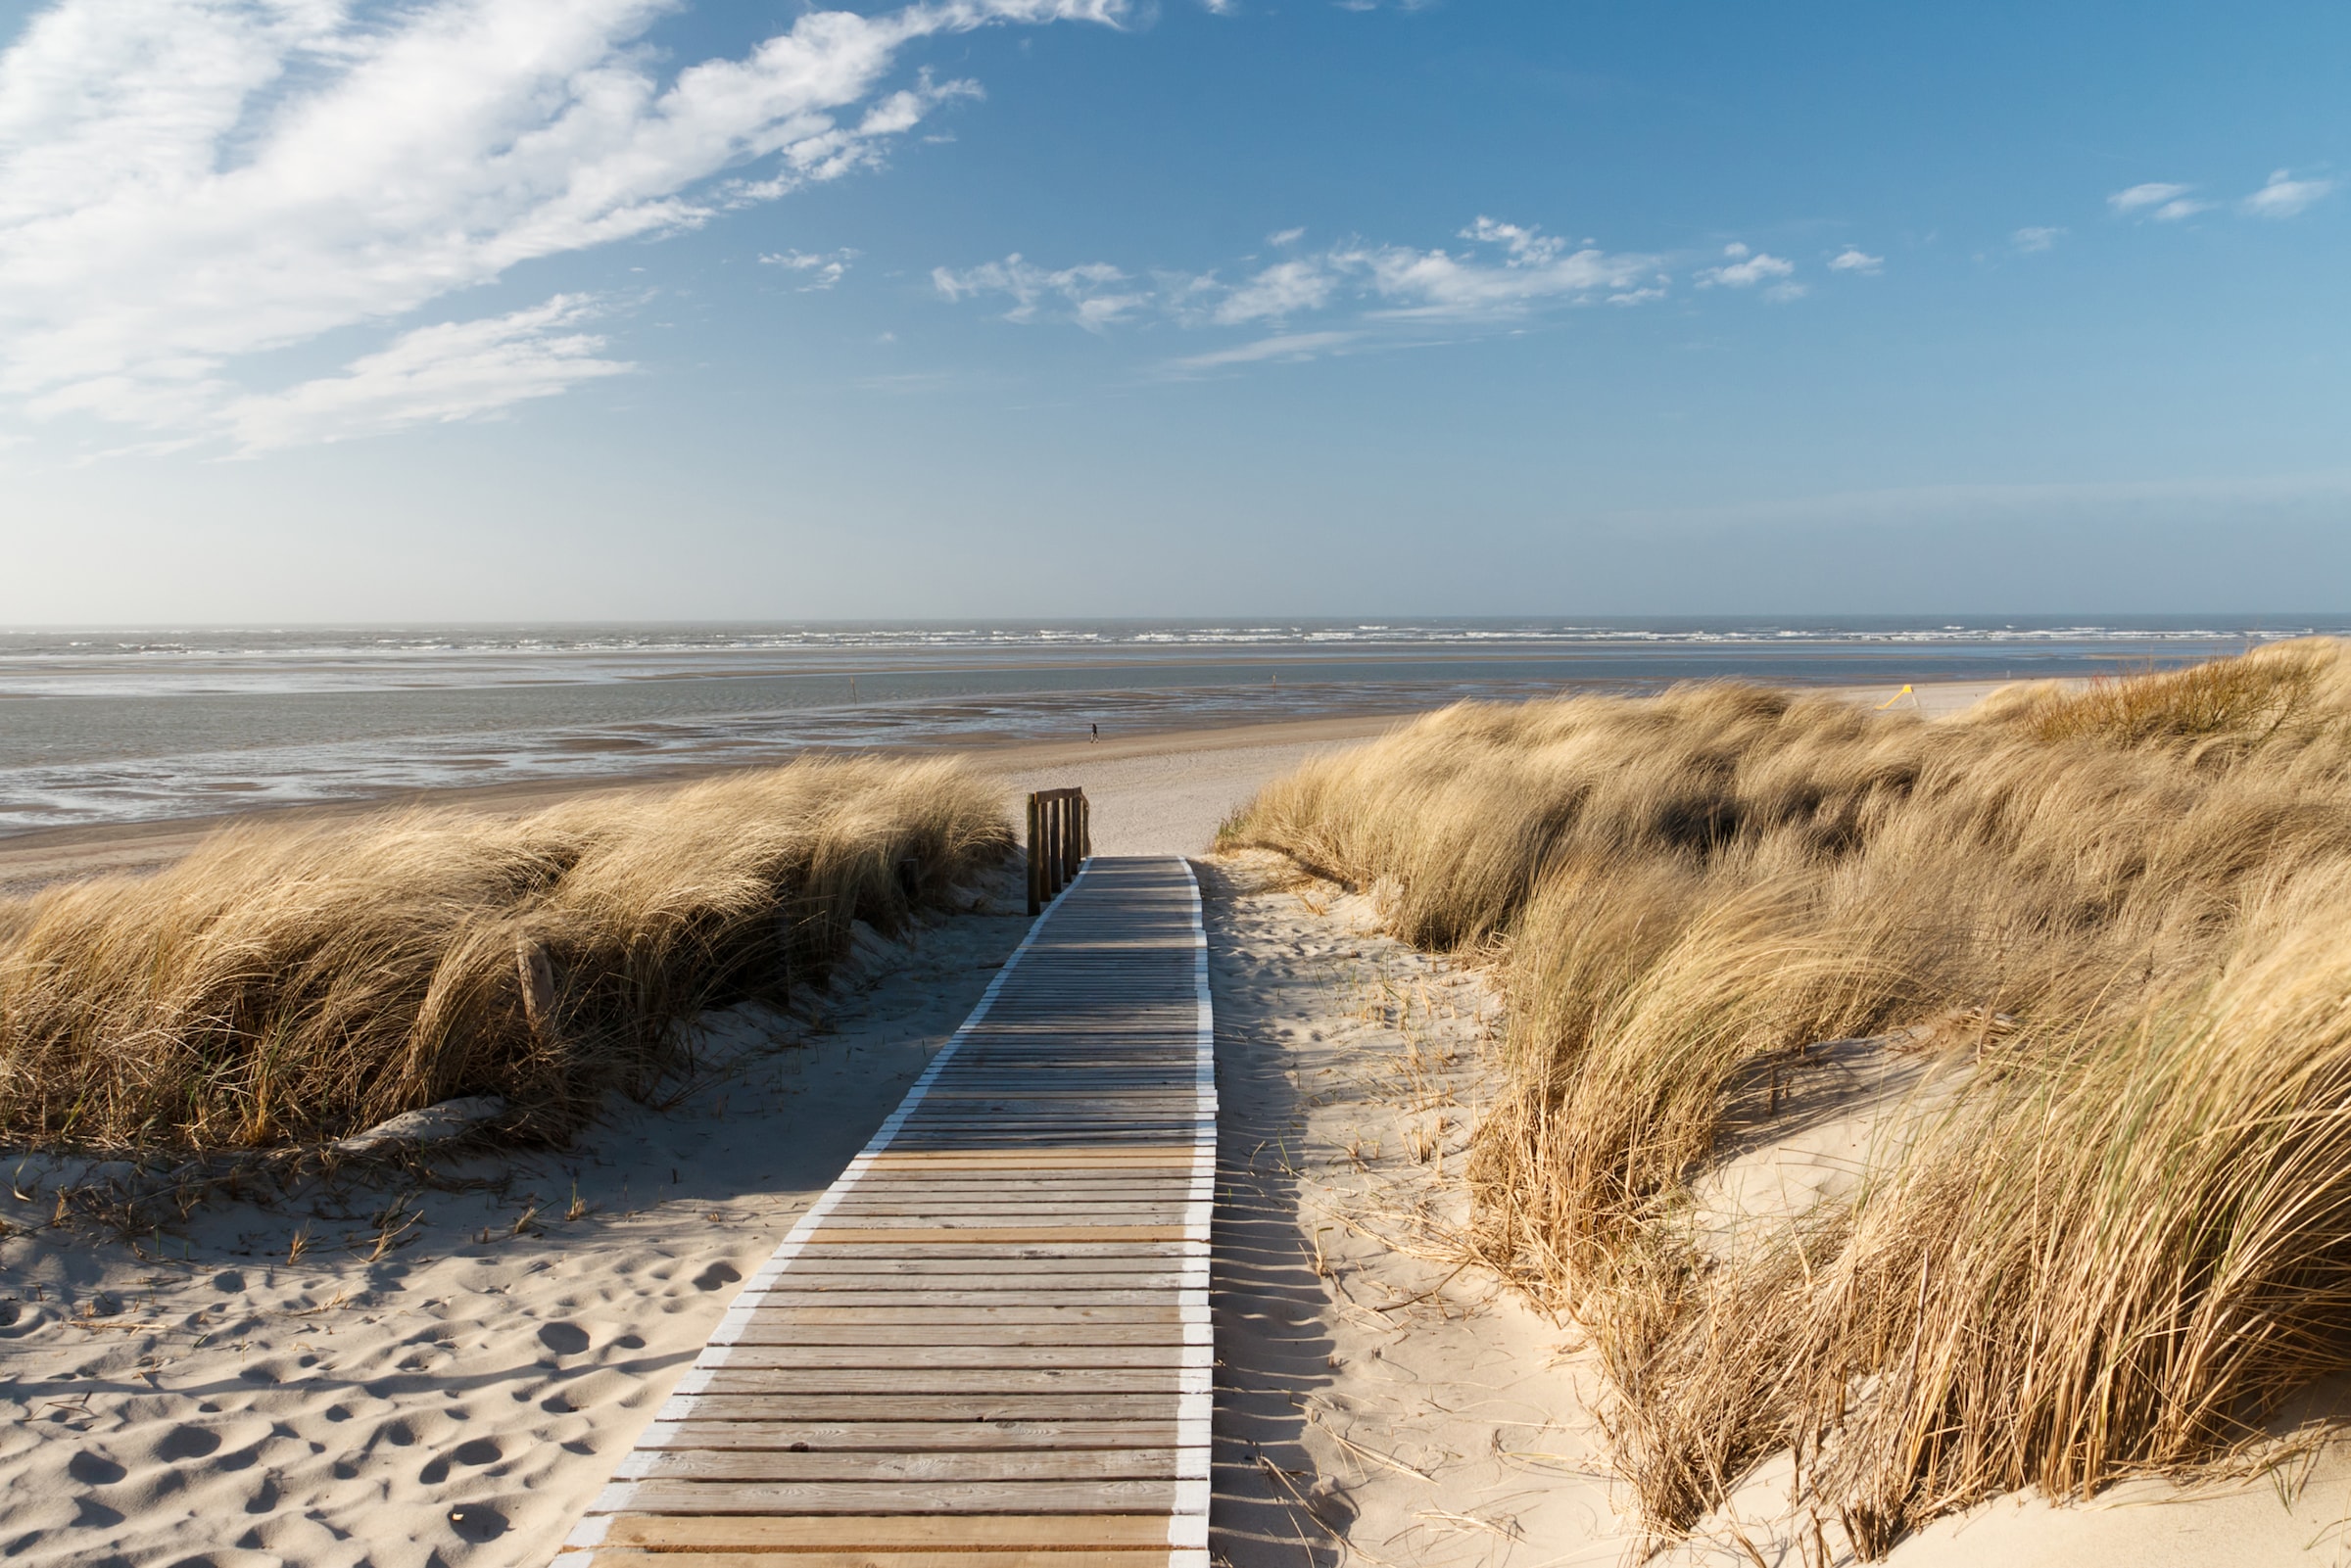 Fototapete »Dunes in Langeoog«